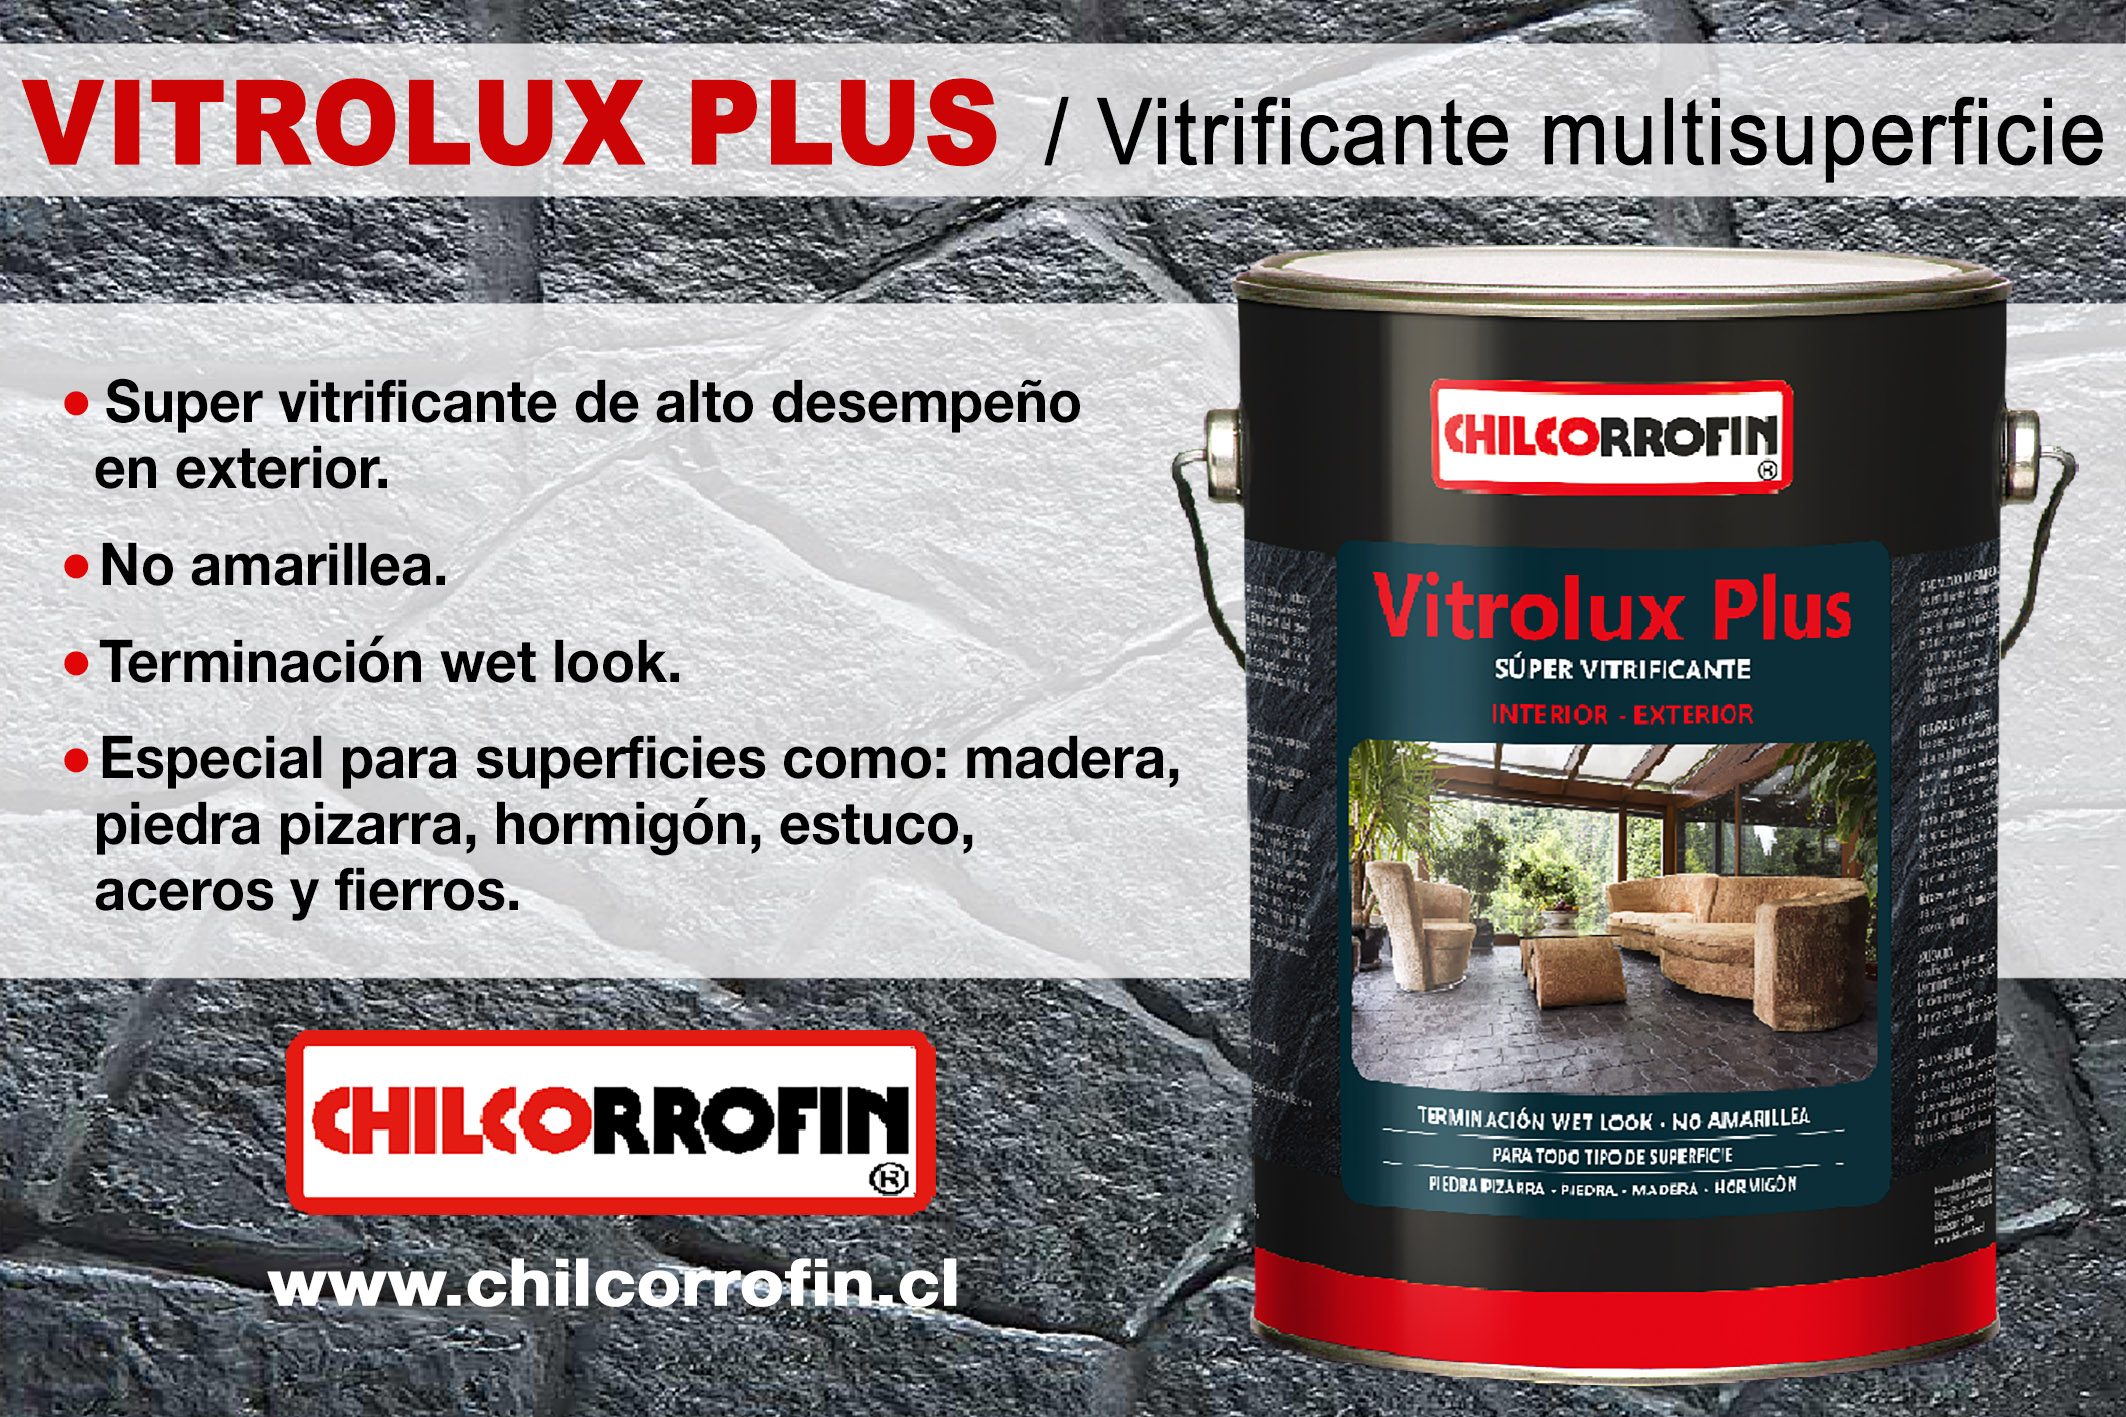 VITROLUX PLUS / Vitrificante multisuperficie